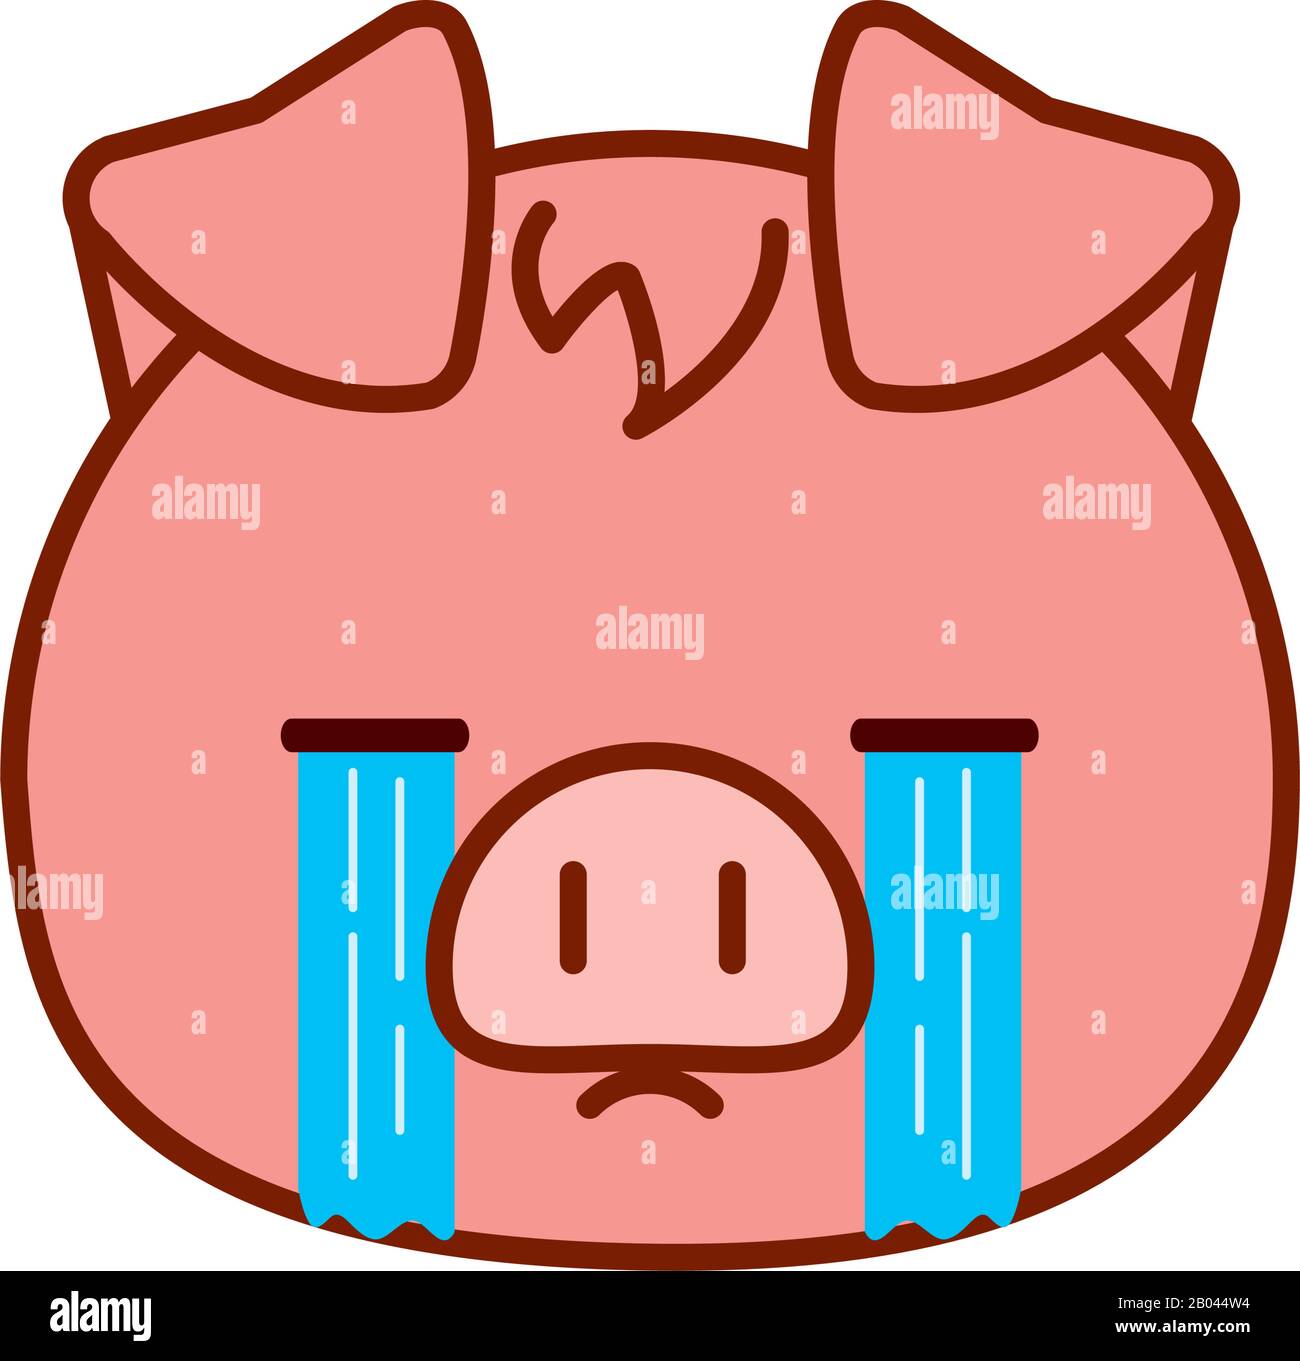 crying cartoon pig